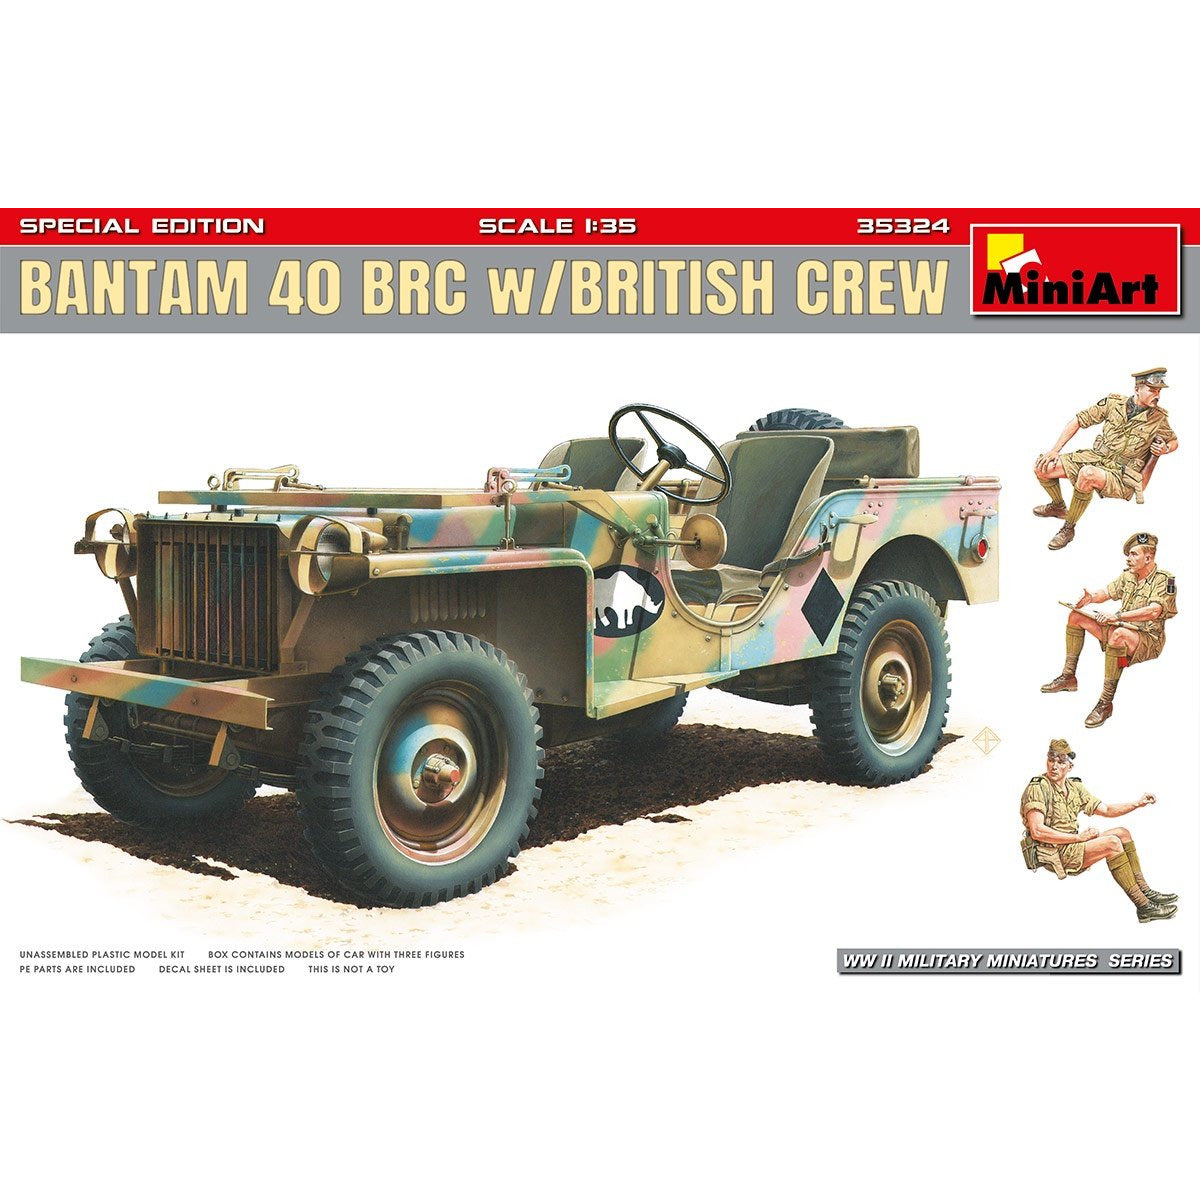 Bantam 40 BRC With British Crew 1/35 by Miniart